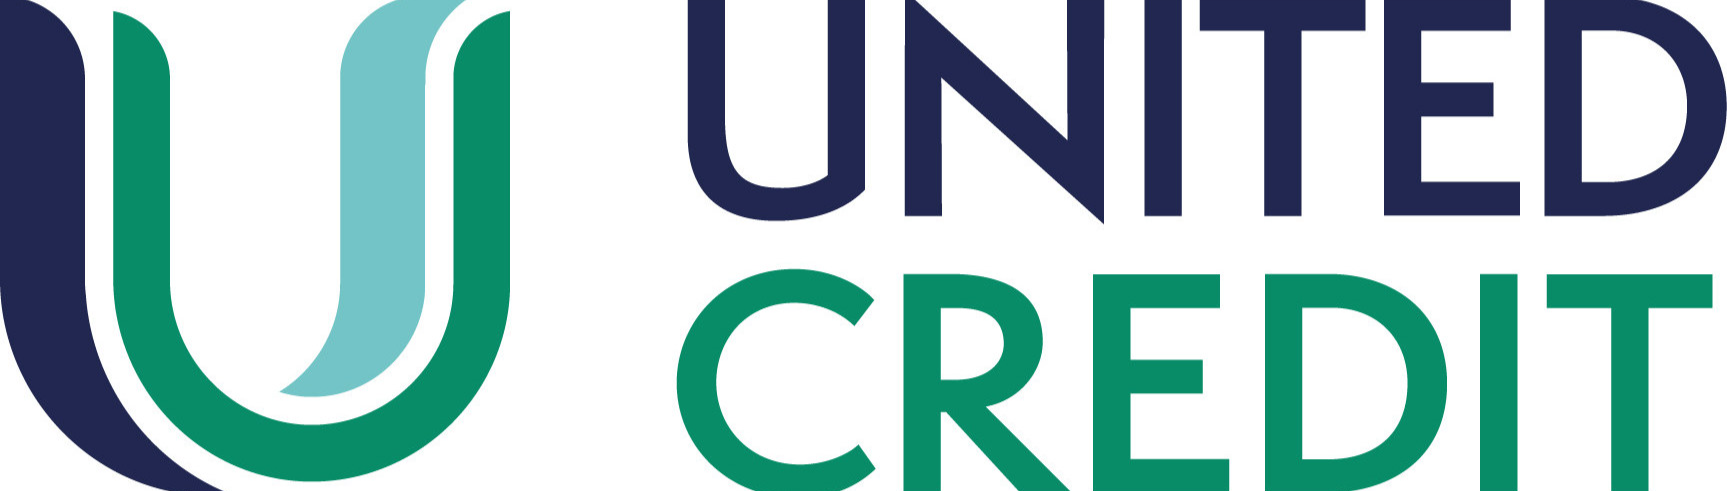 United Credit Logo